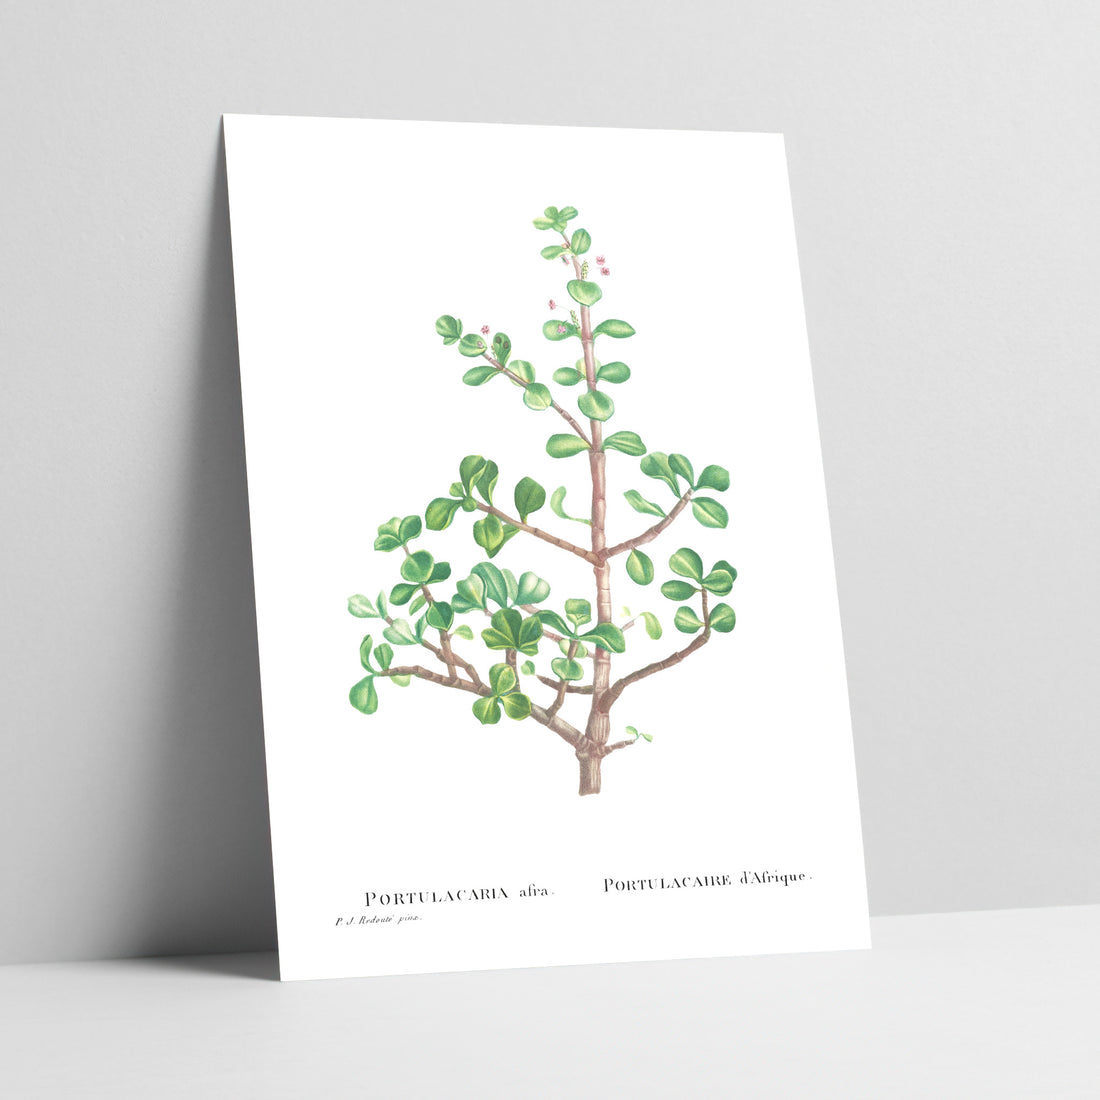 Elephant Bush / Spekboom Botanical Art Print